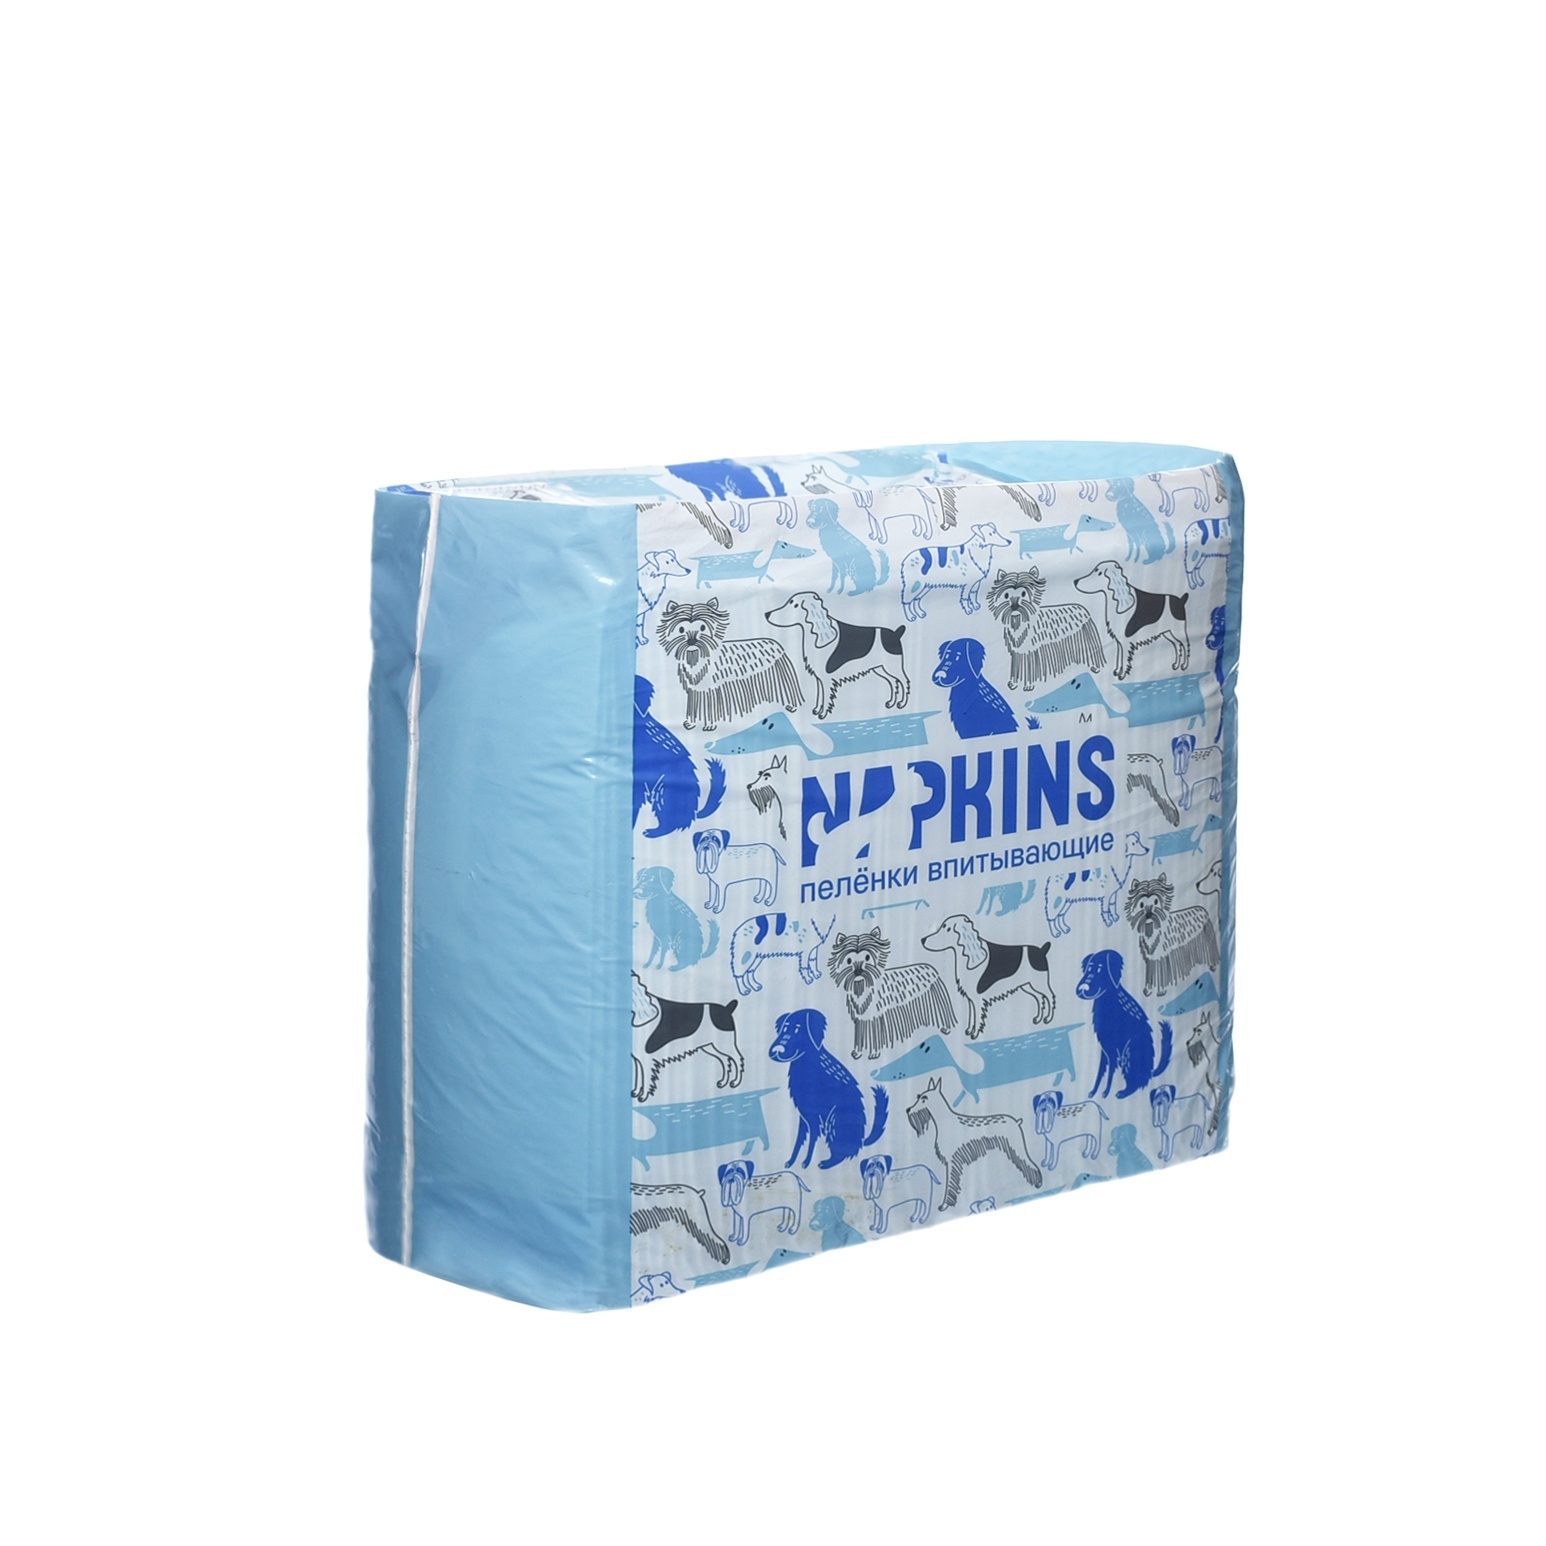 NAPKINS NAPKINS гелевые пелёнки для собак 60х40 (300 г) napkins napkins впитывающие гелевые пелёнки лаванда 60х40 30 шт